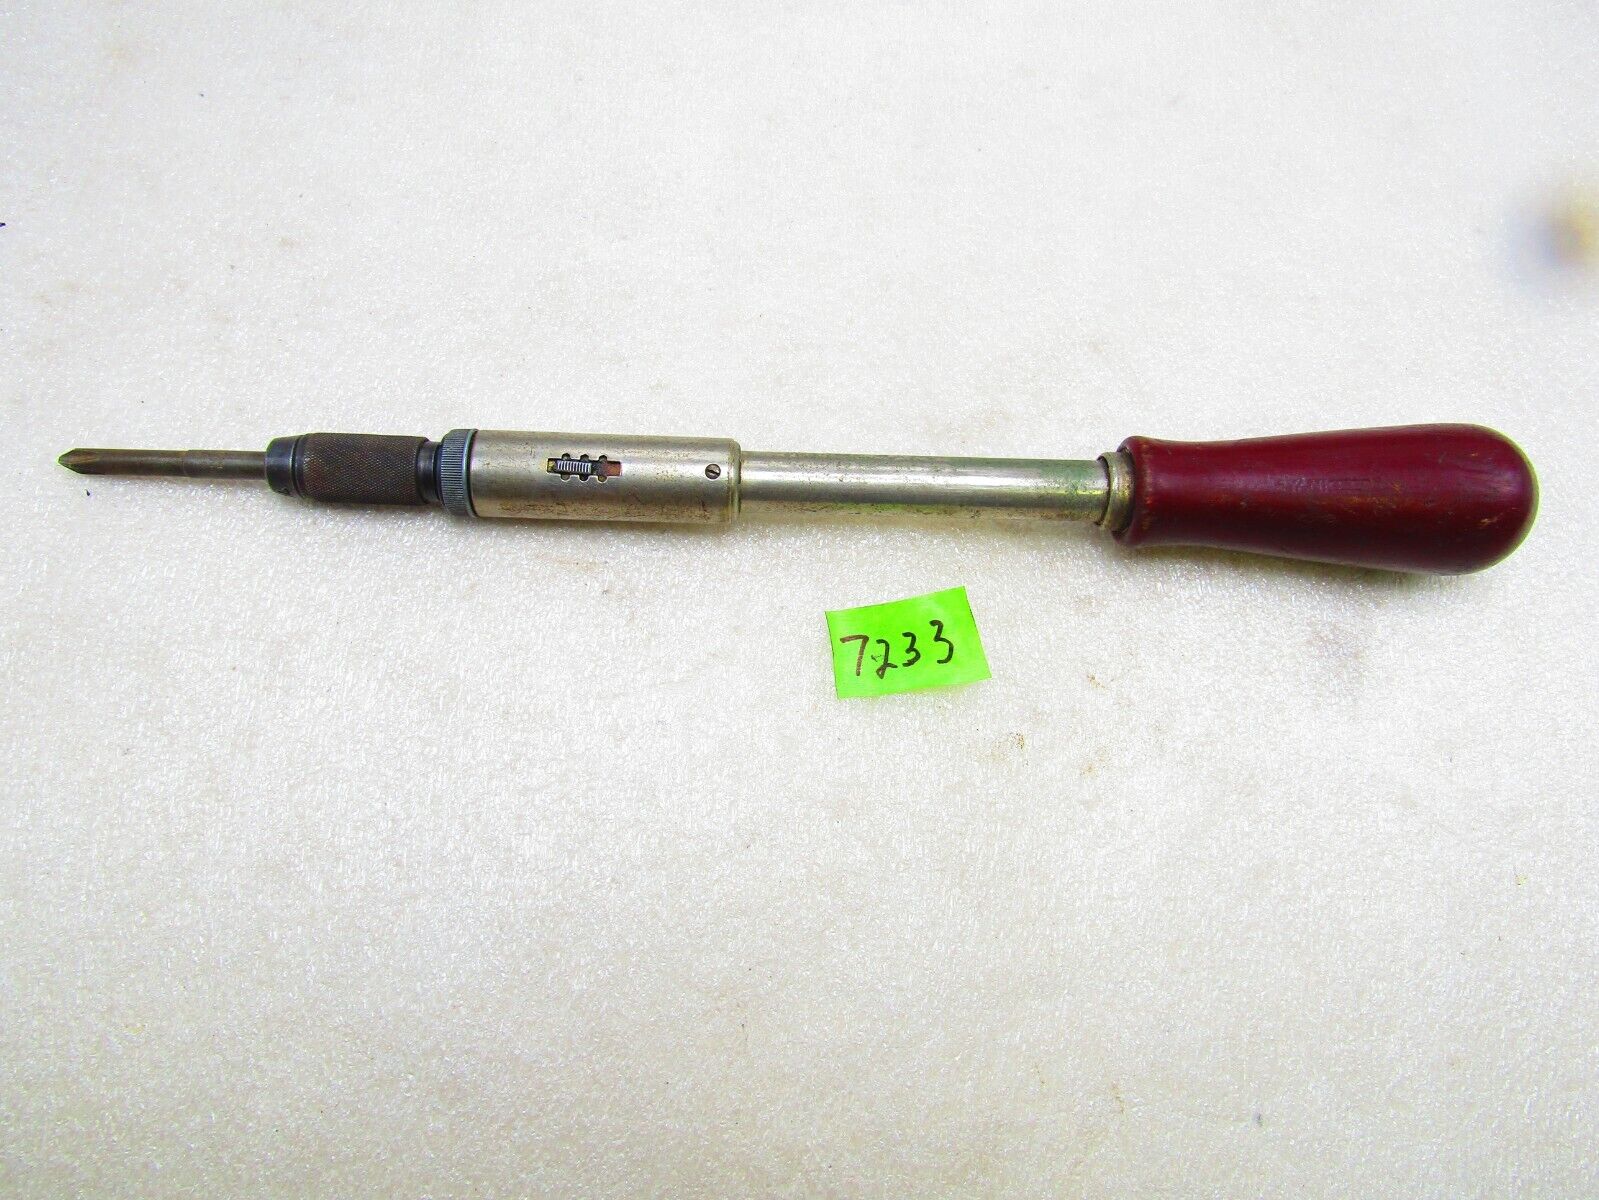 Stanley Yankee No. 130A Spiral ratchet screwdriver by North Bros.